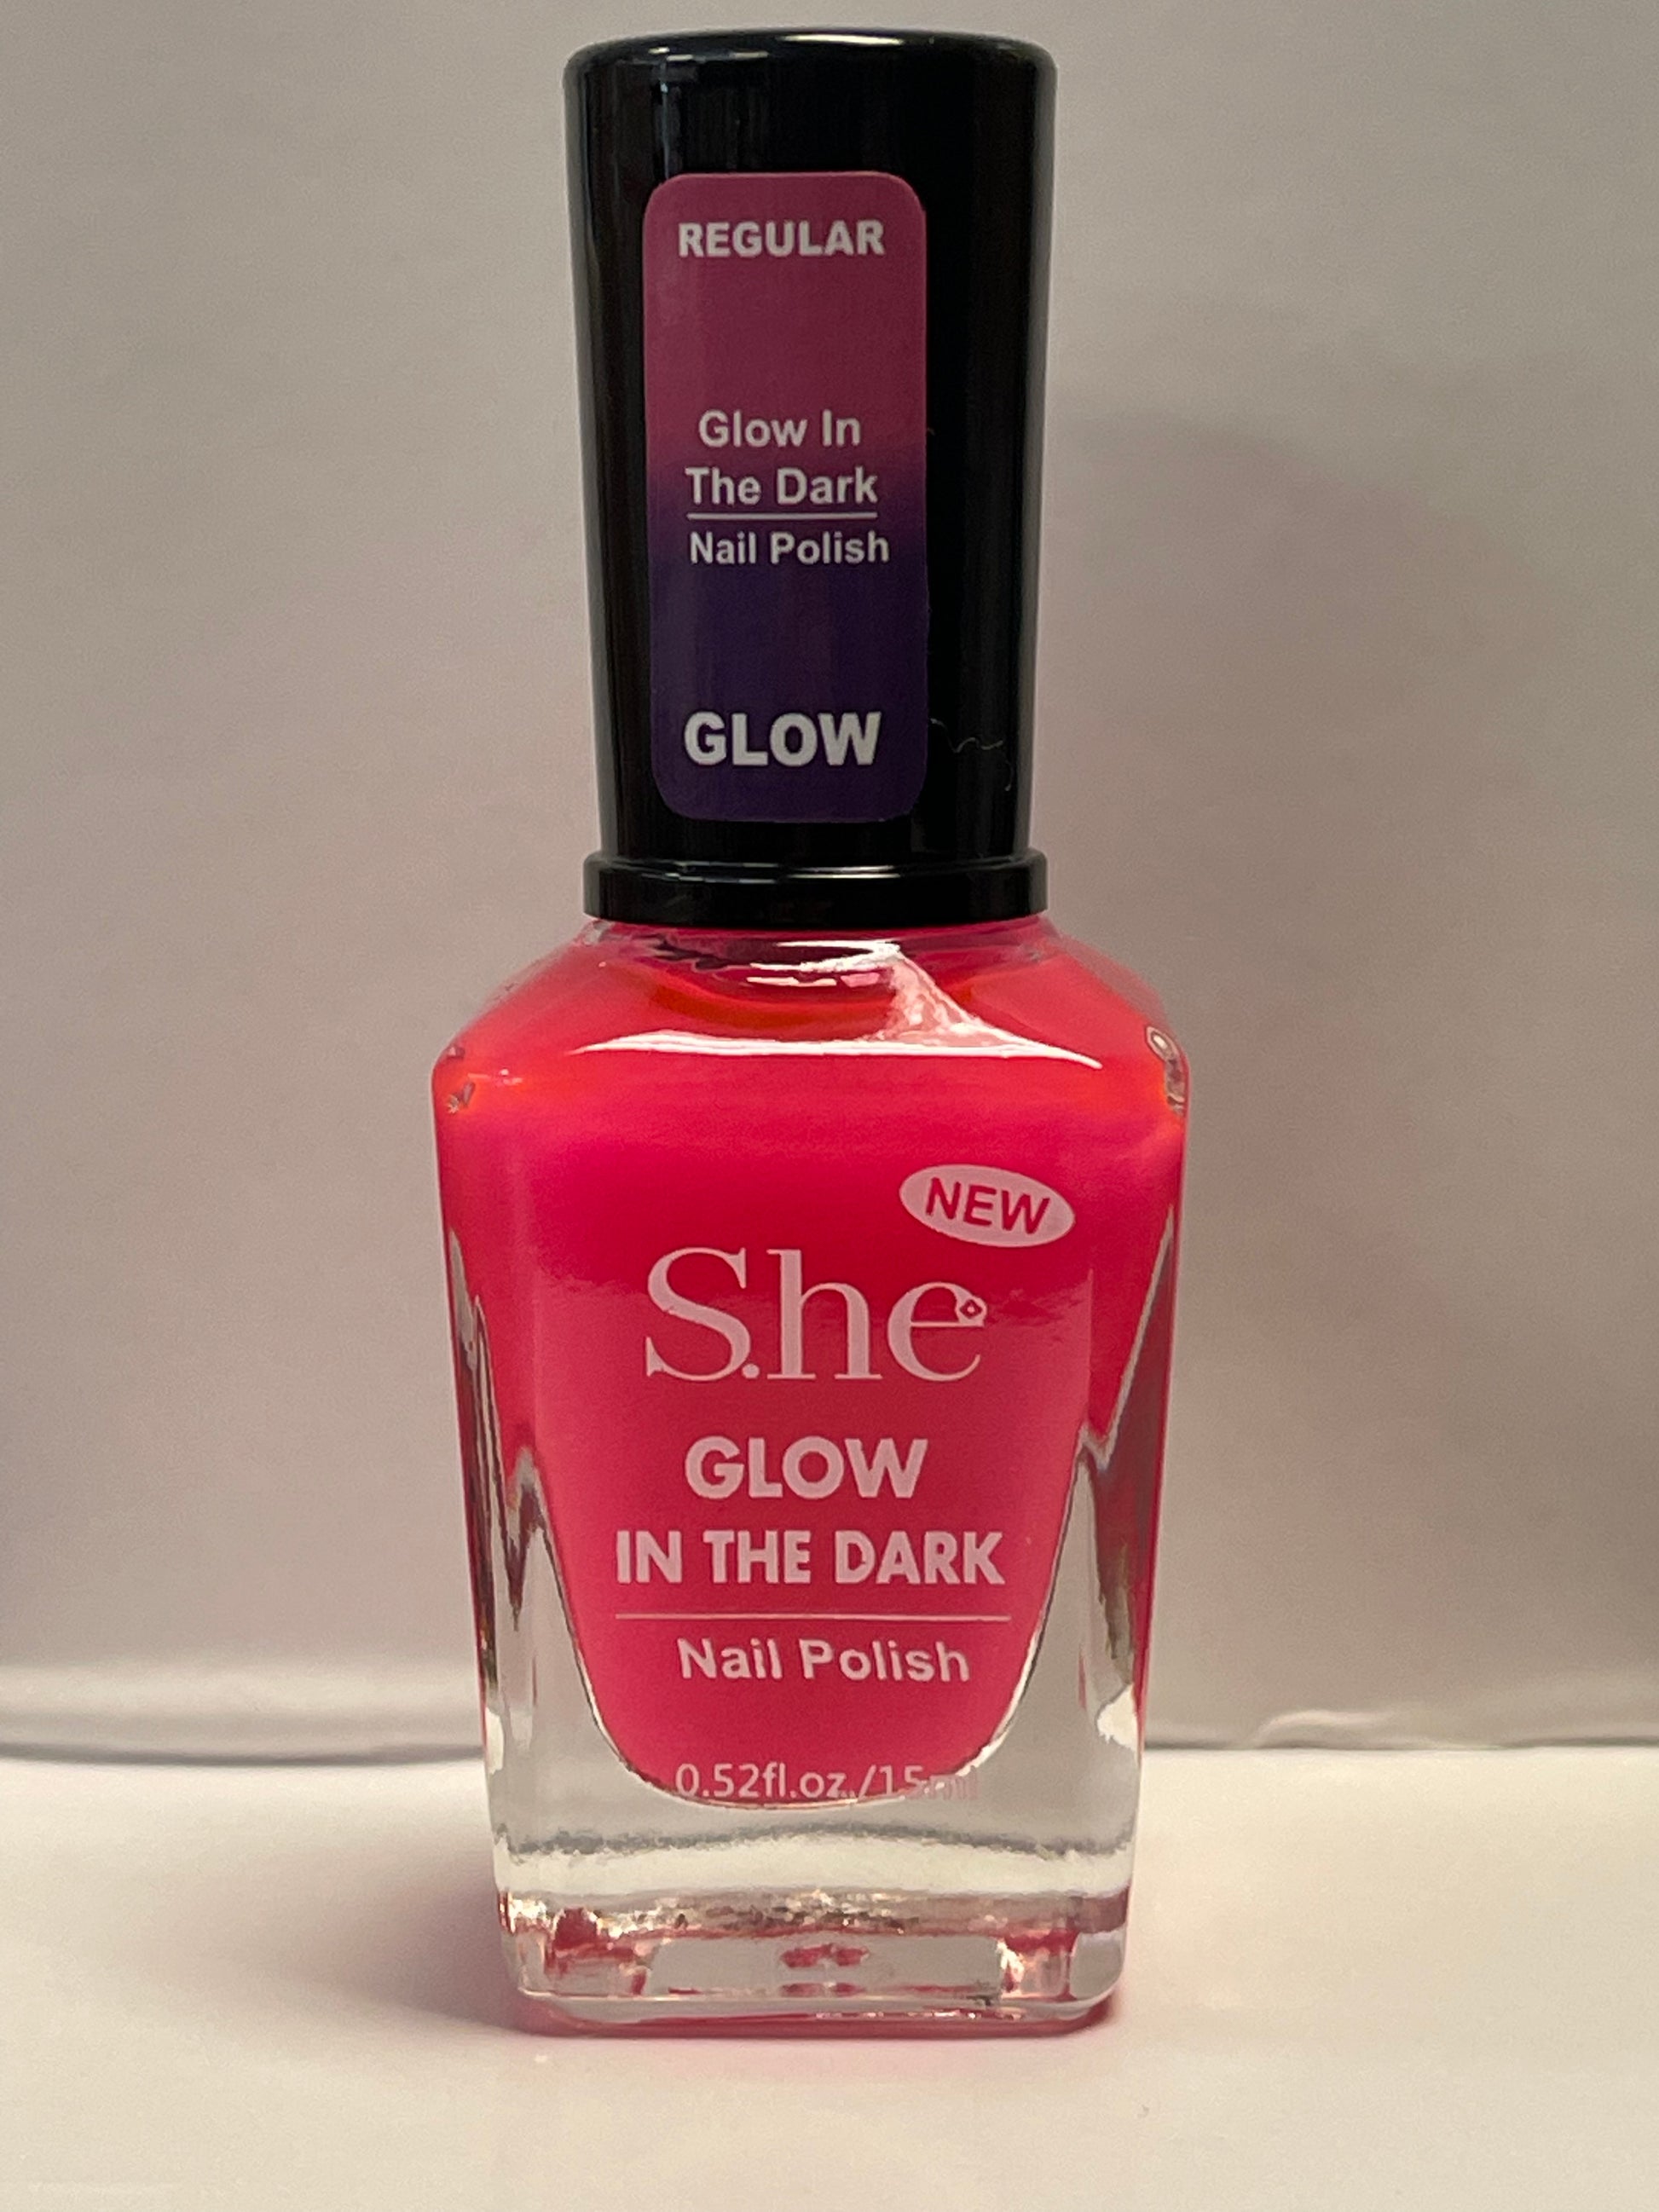 Glow in the dar nail polish (hot pink) - Tam's Natural Solutions